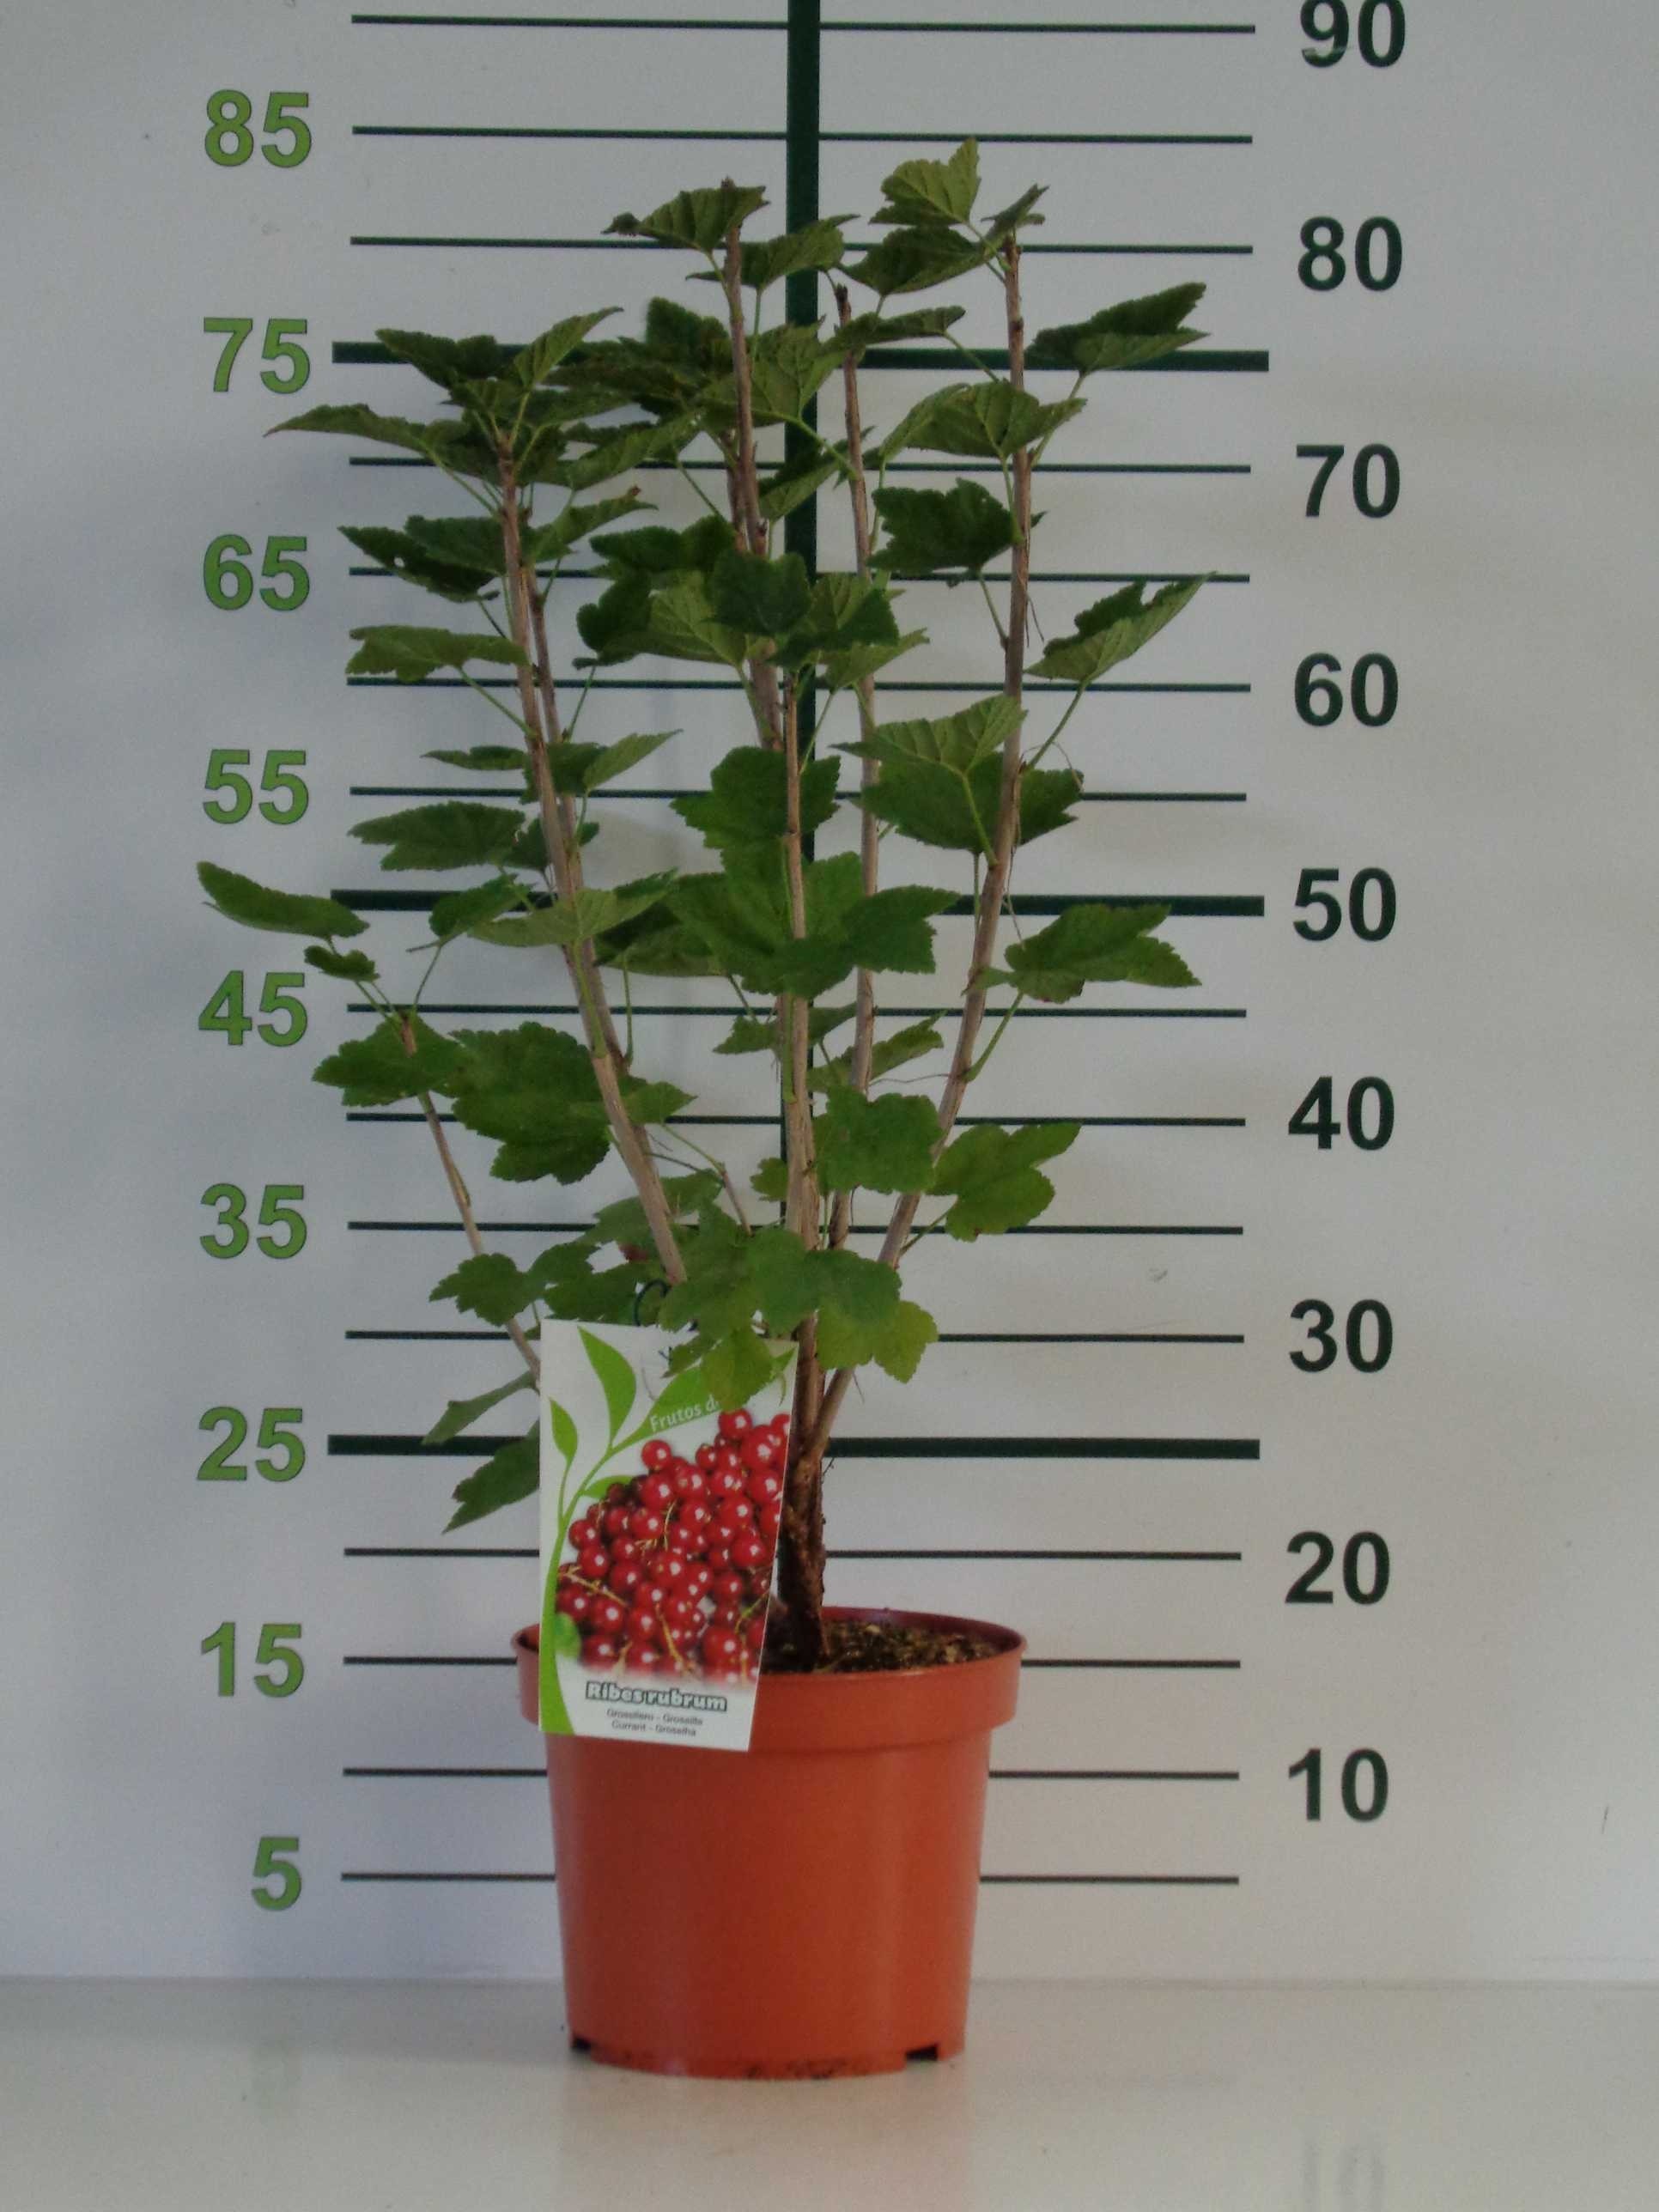 Ribes rubrum "Jonkheer van Tets" 5L 60/70 (Grosella roja)